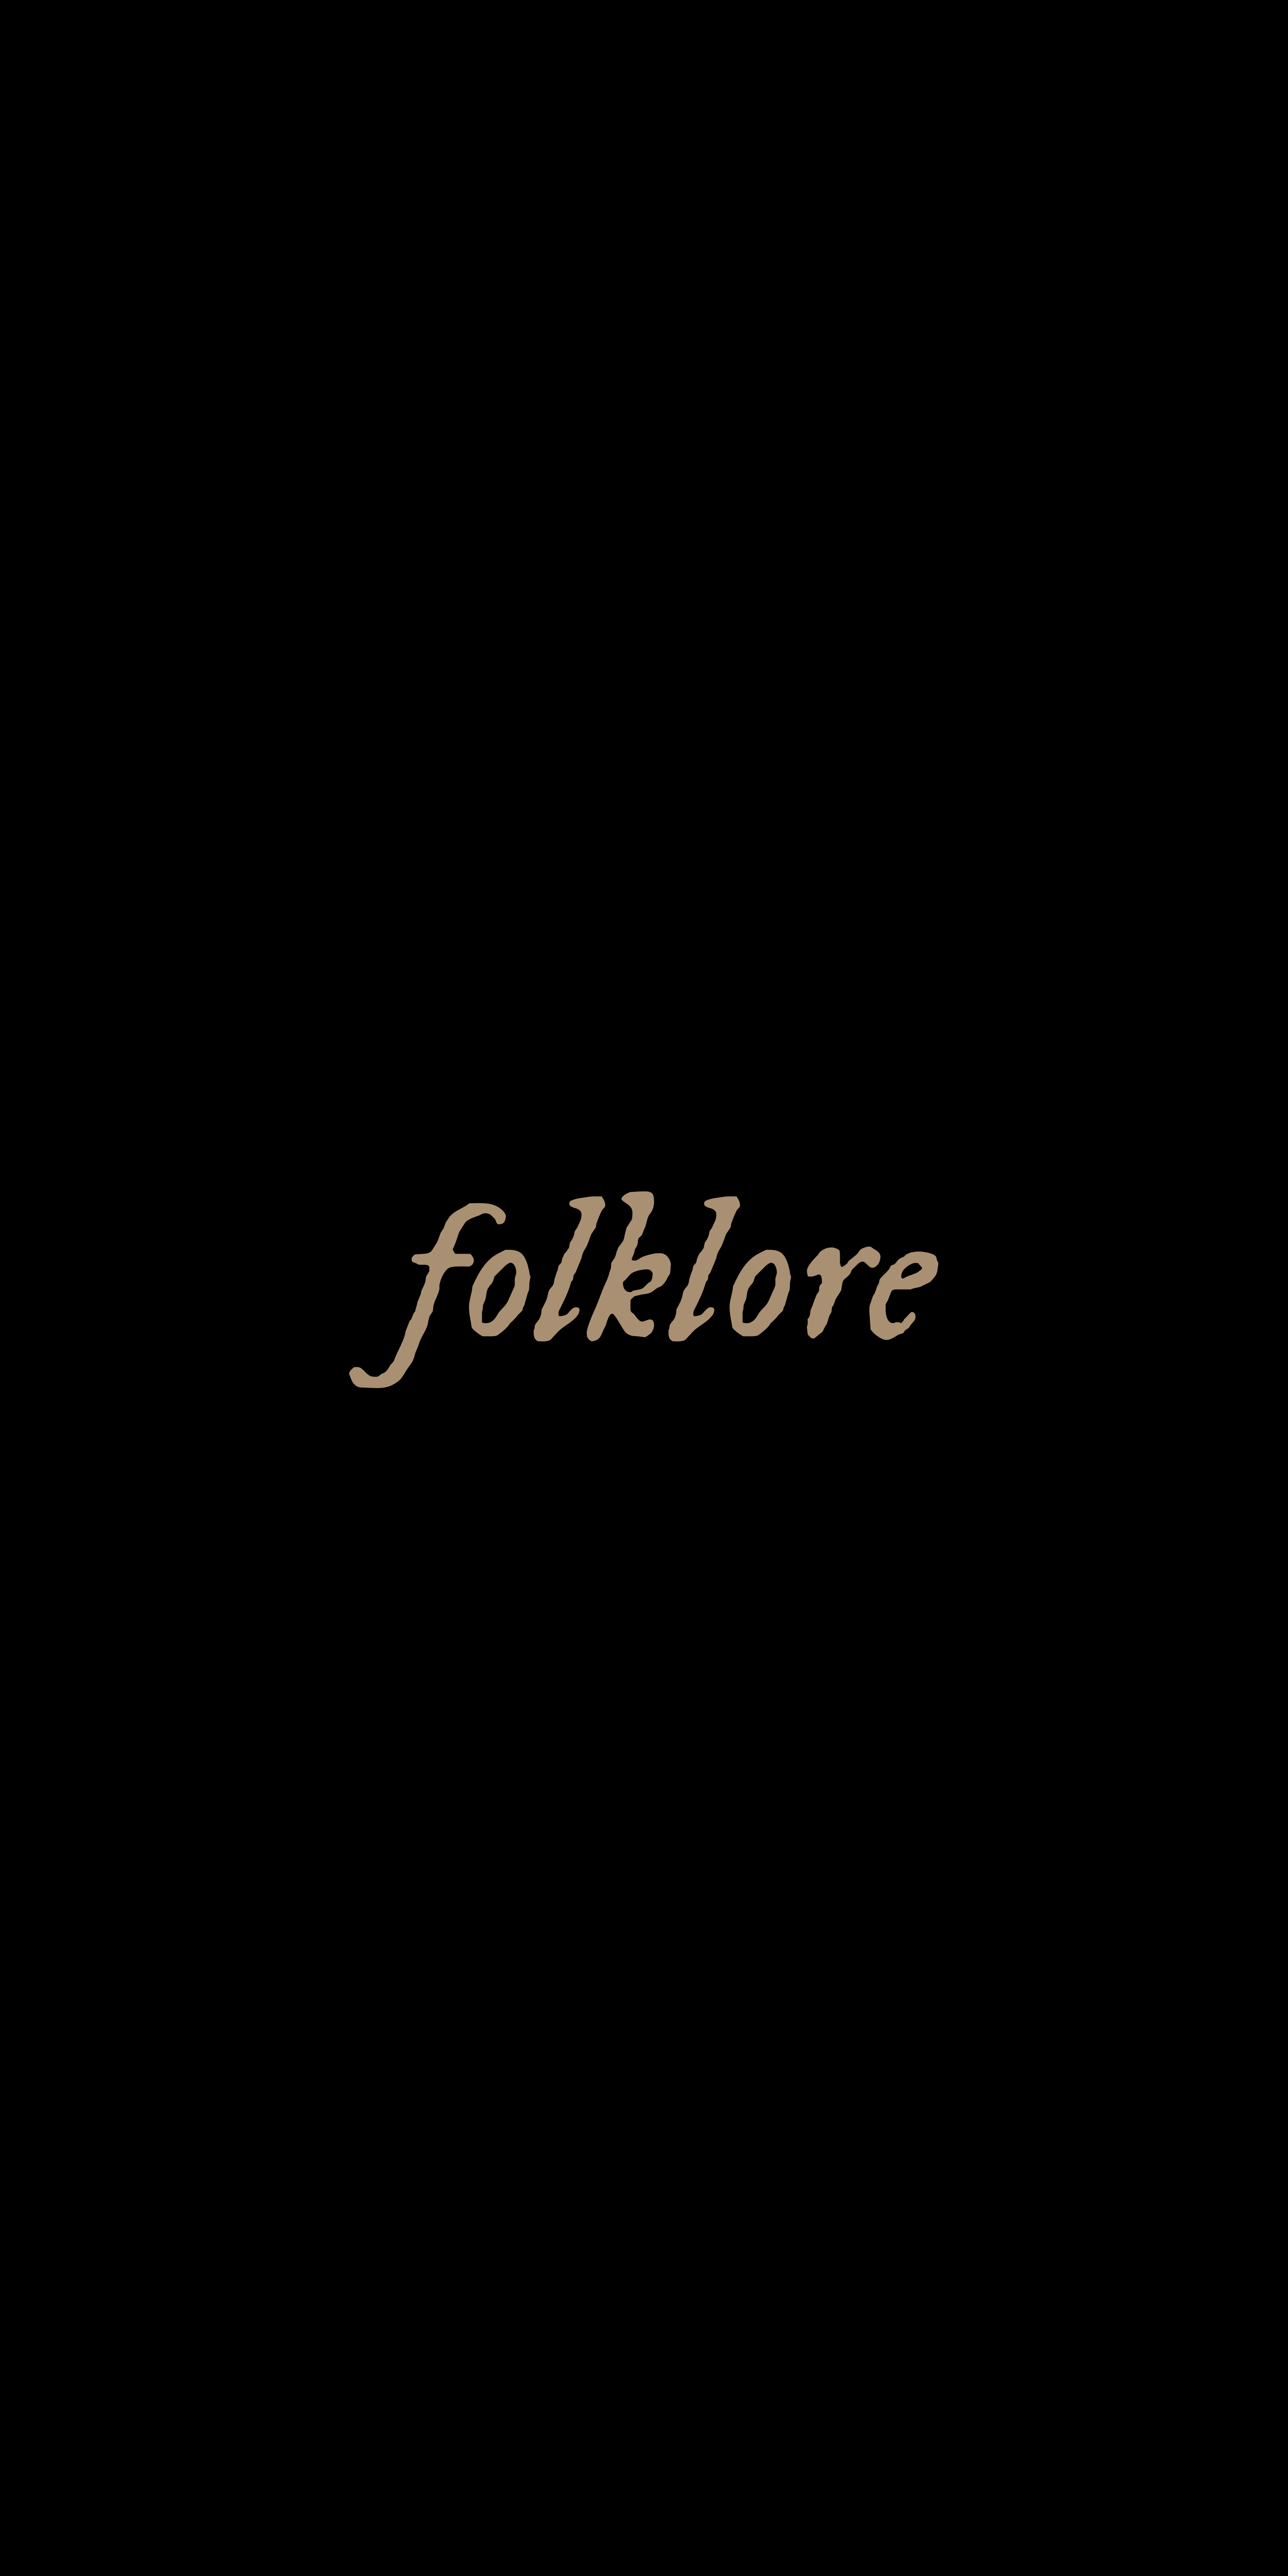 Minimalist folklore desktop and phone wallpaper.happy folklore